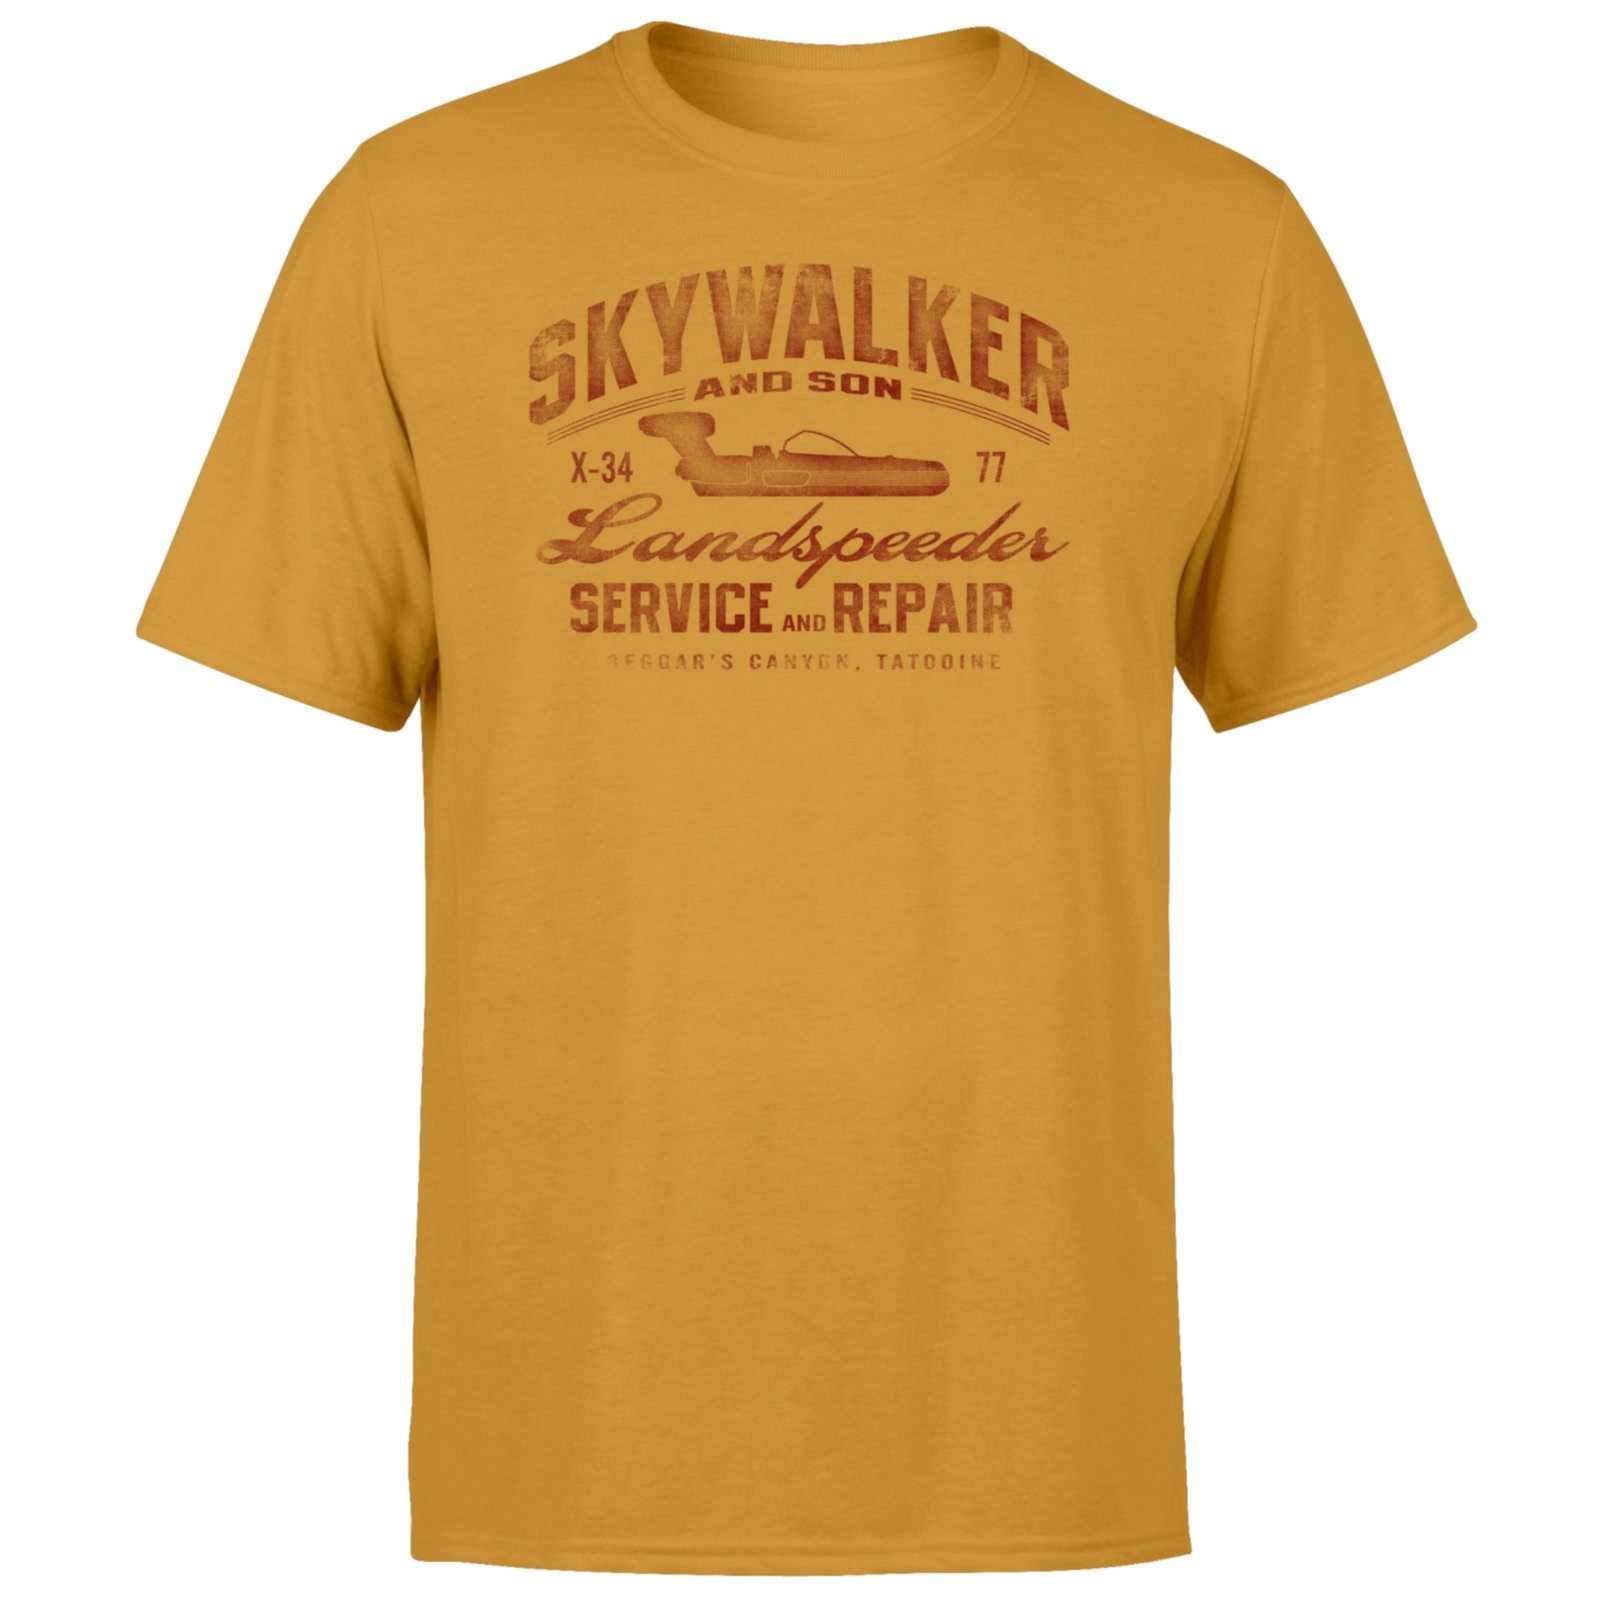 Star Wars Skywalker Landspeeder Repair Unisex T-Shirt - Mustard - S